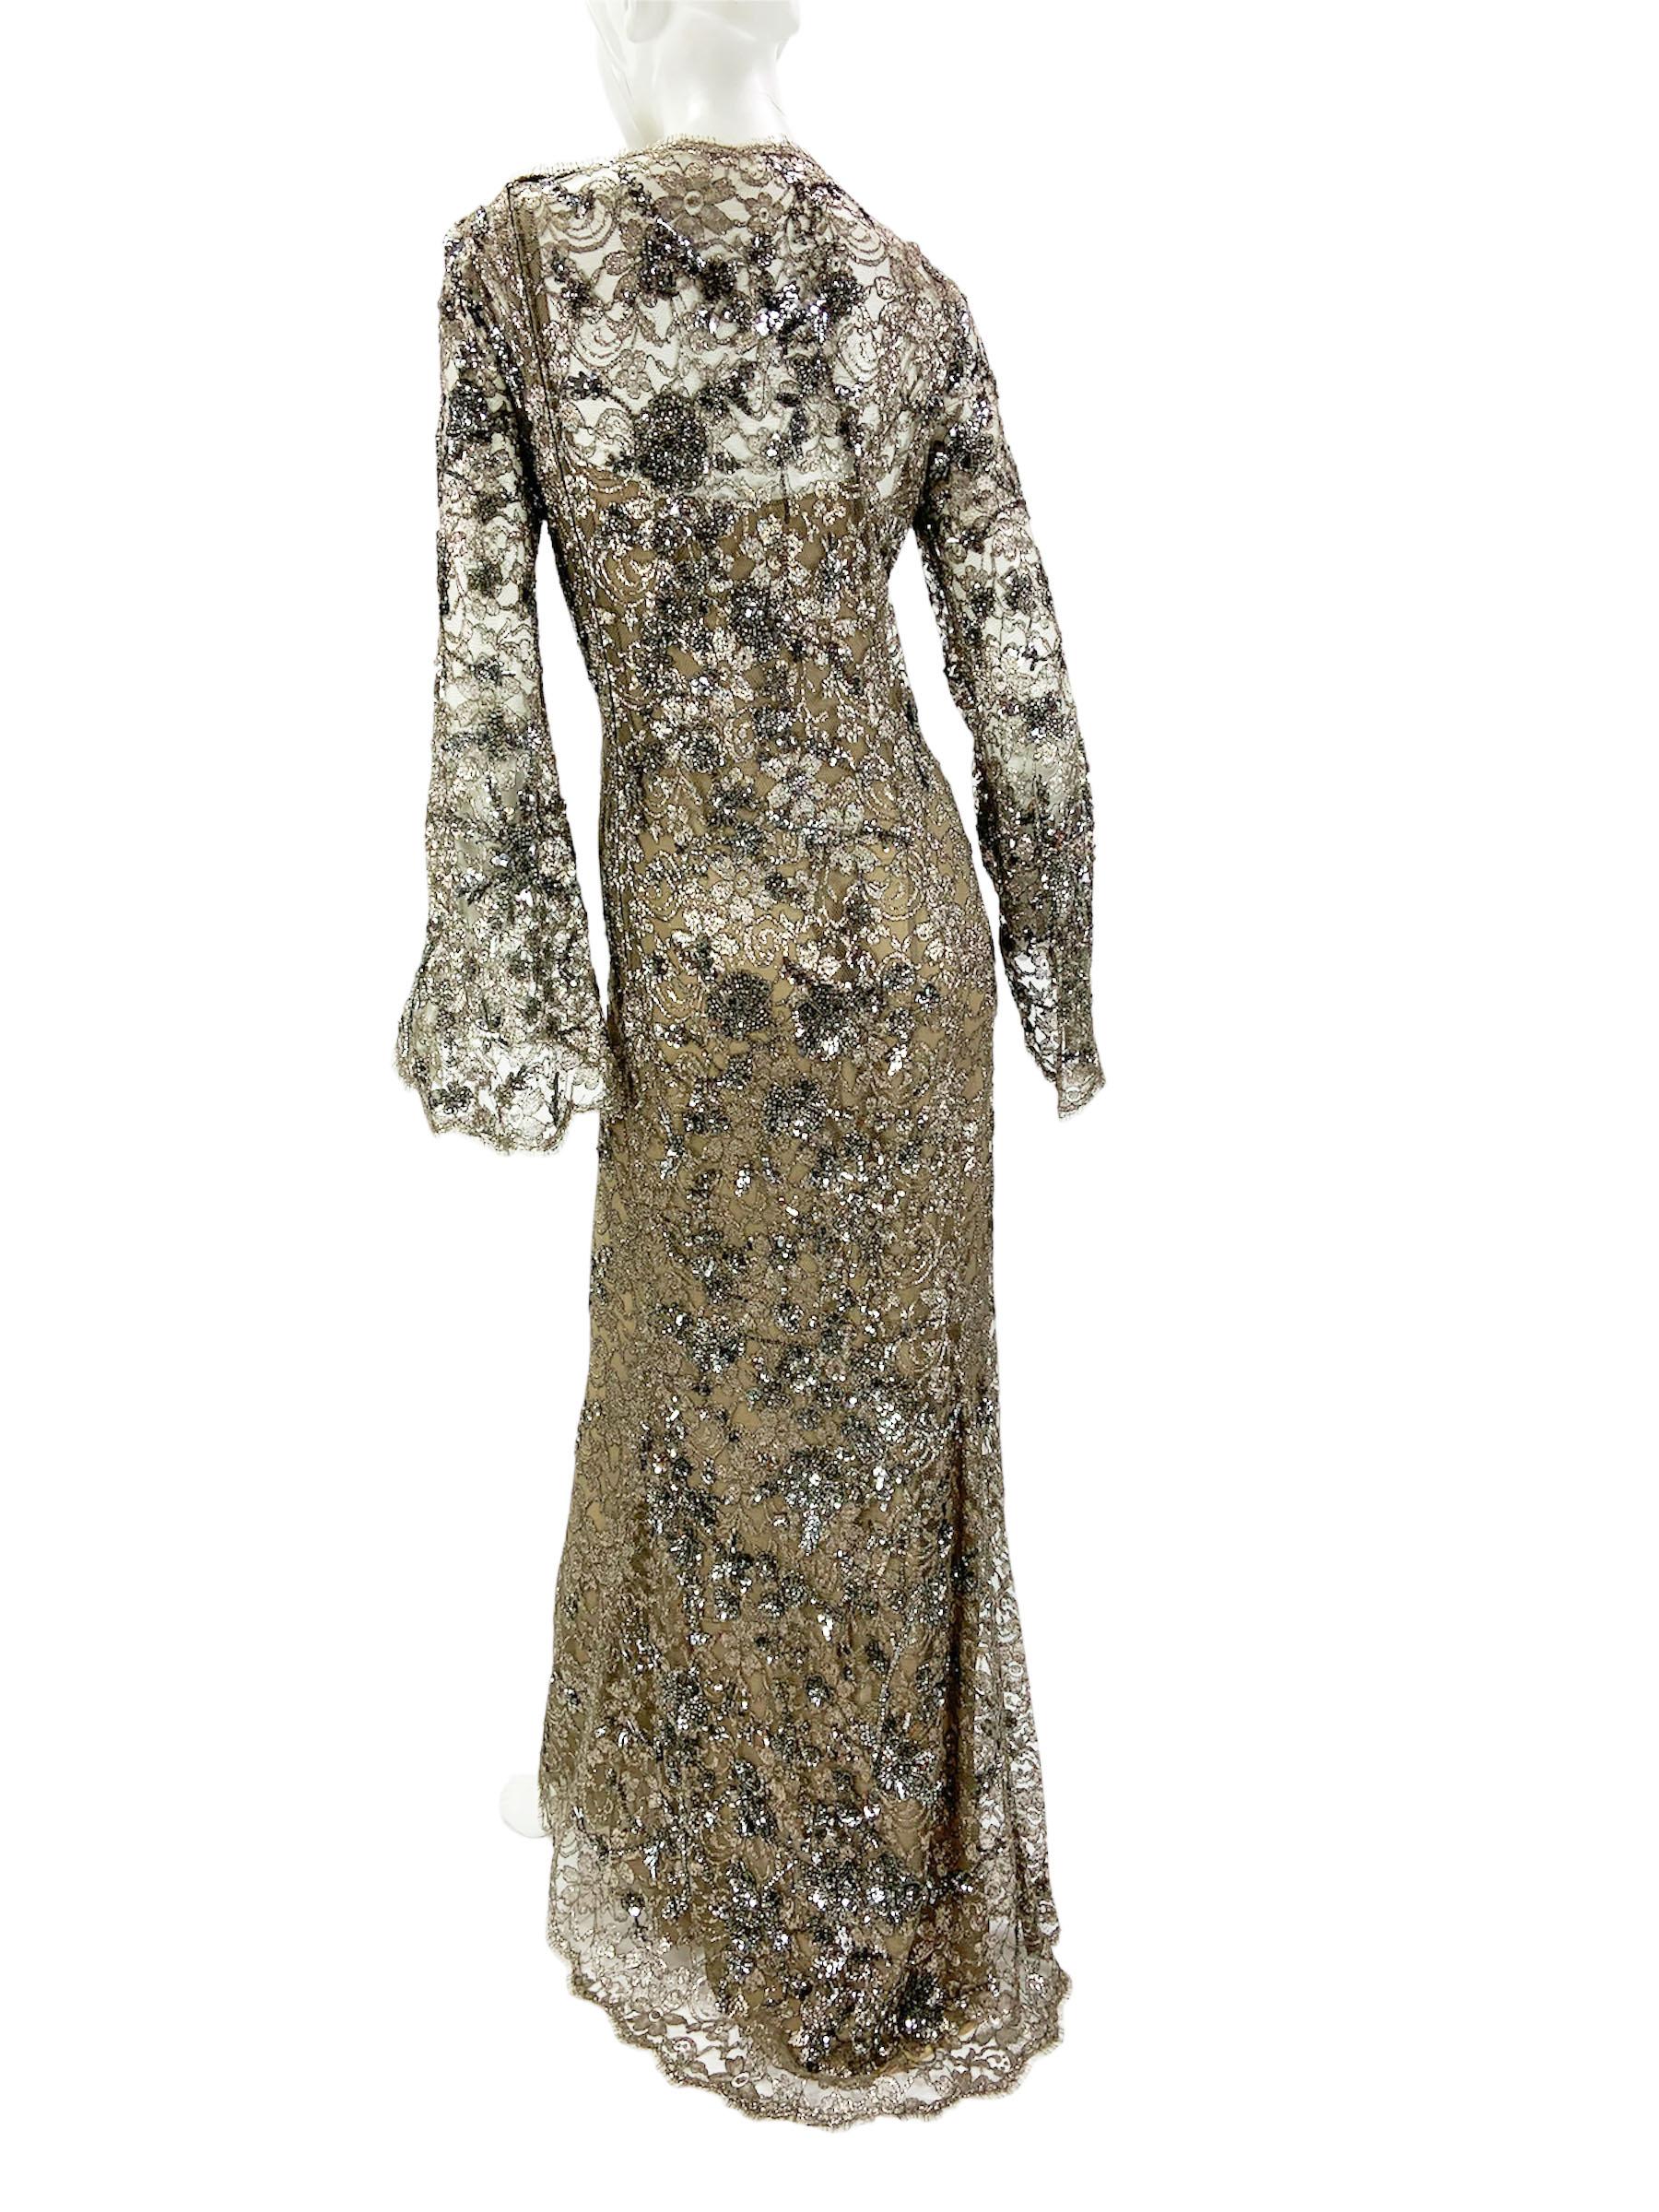 Women's Vintage Oscar de la Renta Fully Embellished Smoky Gray Lace Dress Gown 